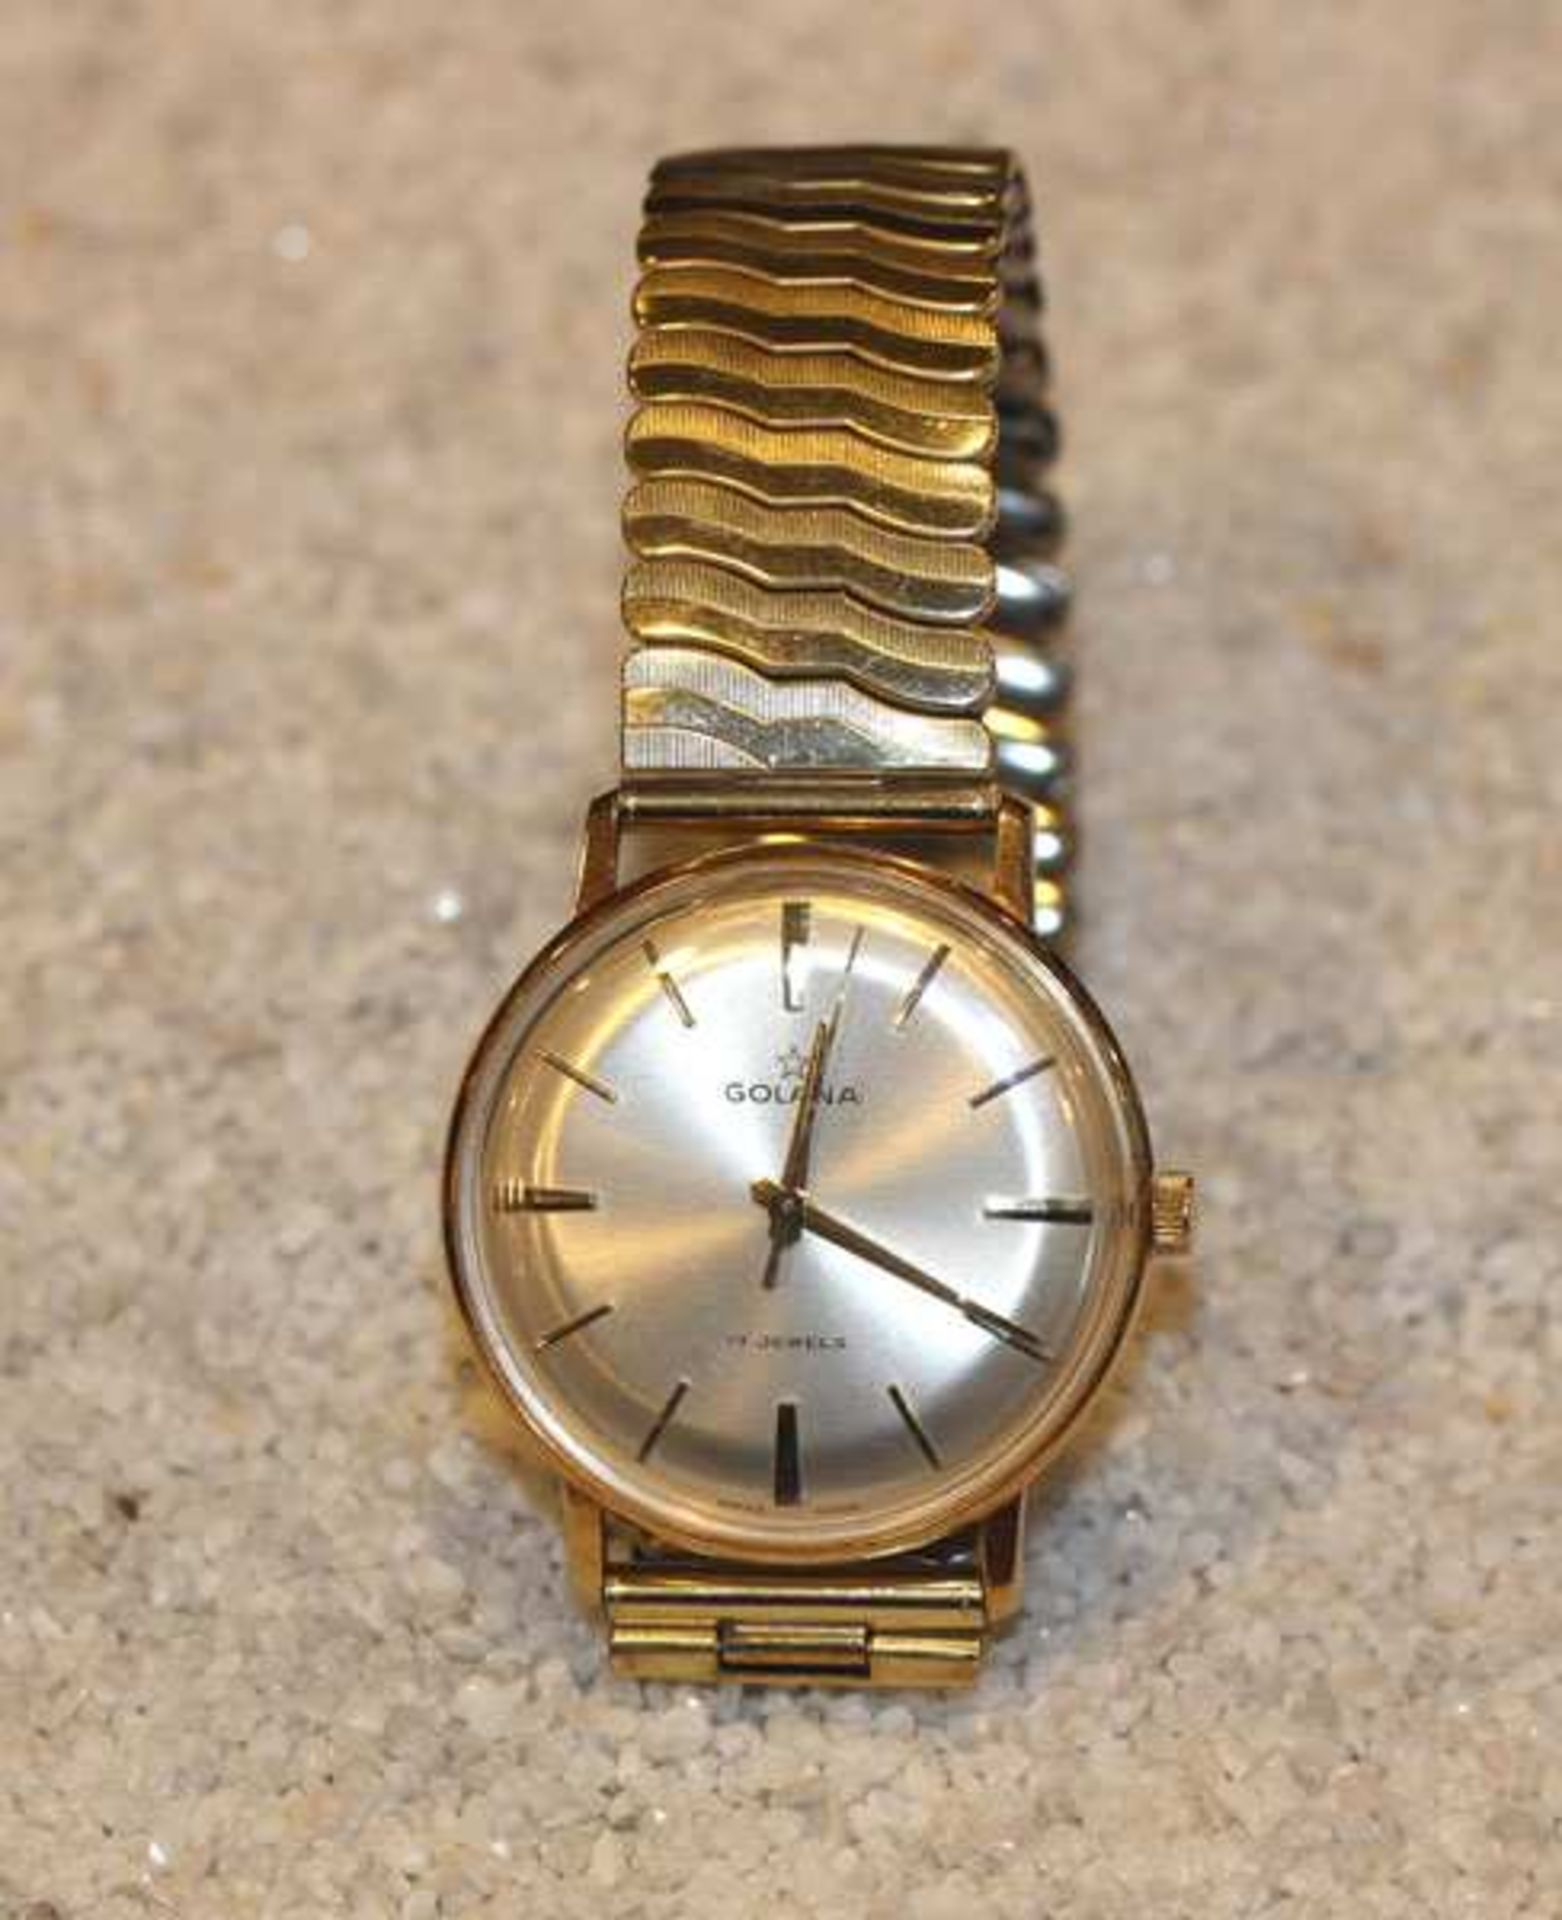 Golona Armbanduhr mit mechanischem Uhrwerk, vergoldet, intakt